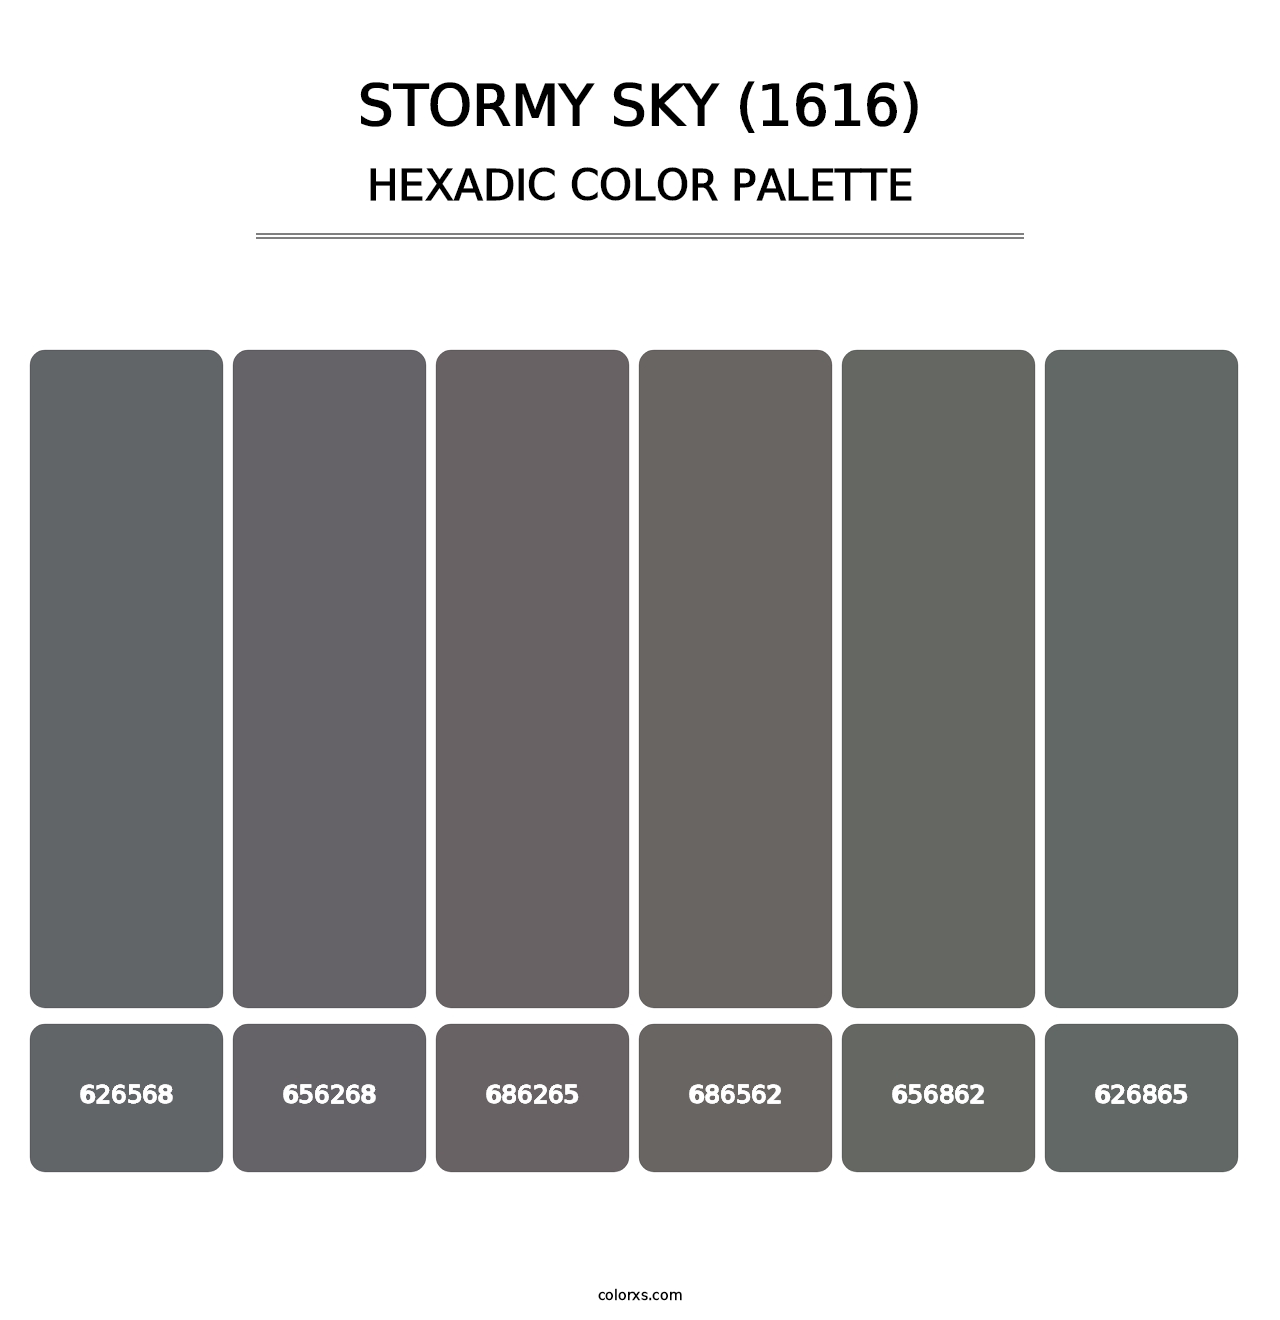 Stormy Sky (1616) - Hexadic Color Palette